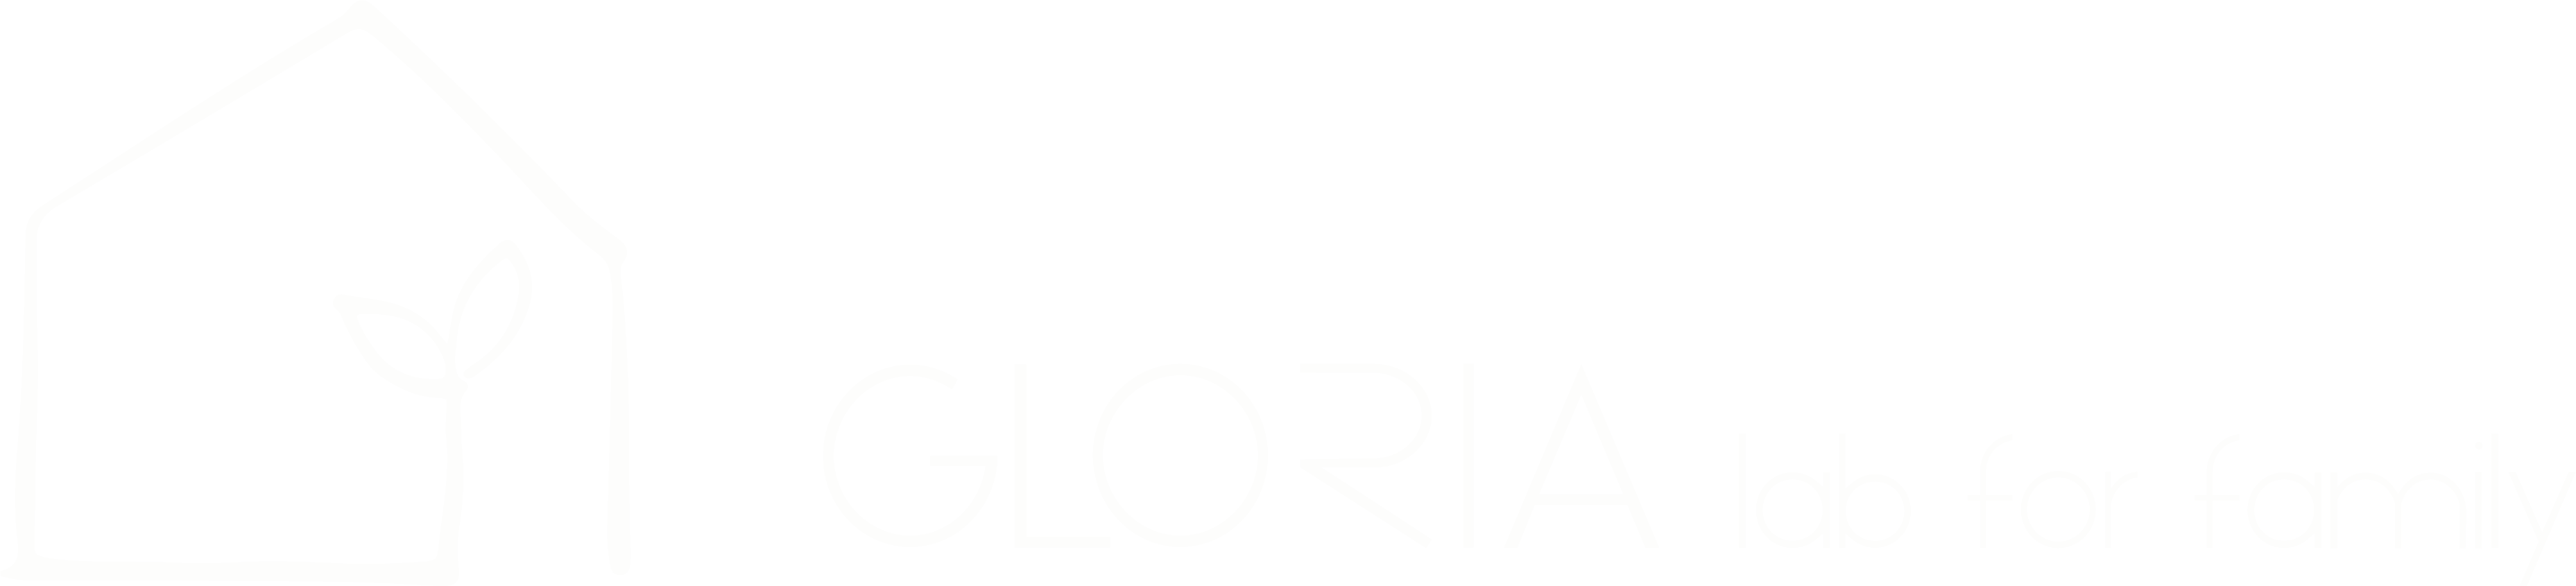 Gloria lab for family